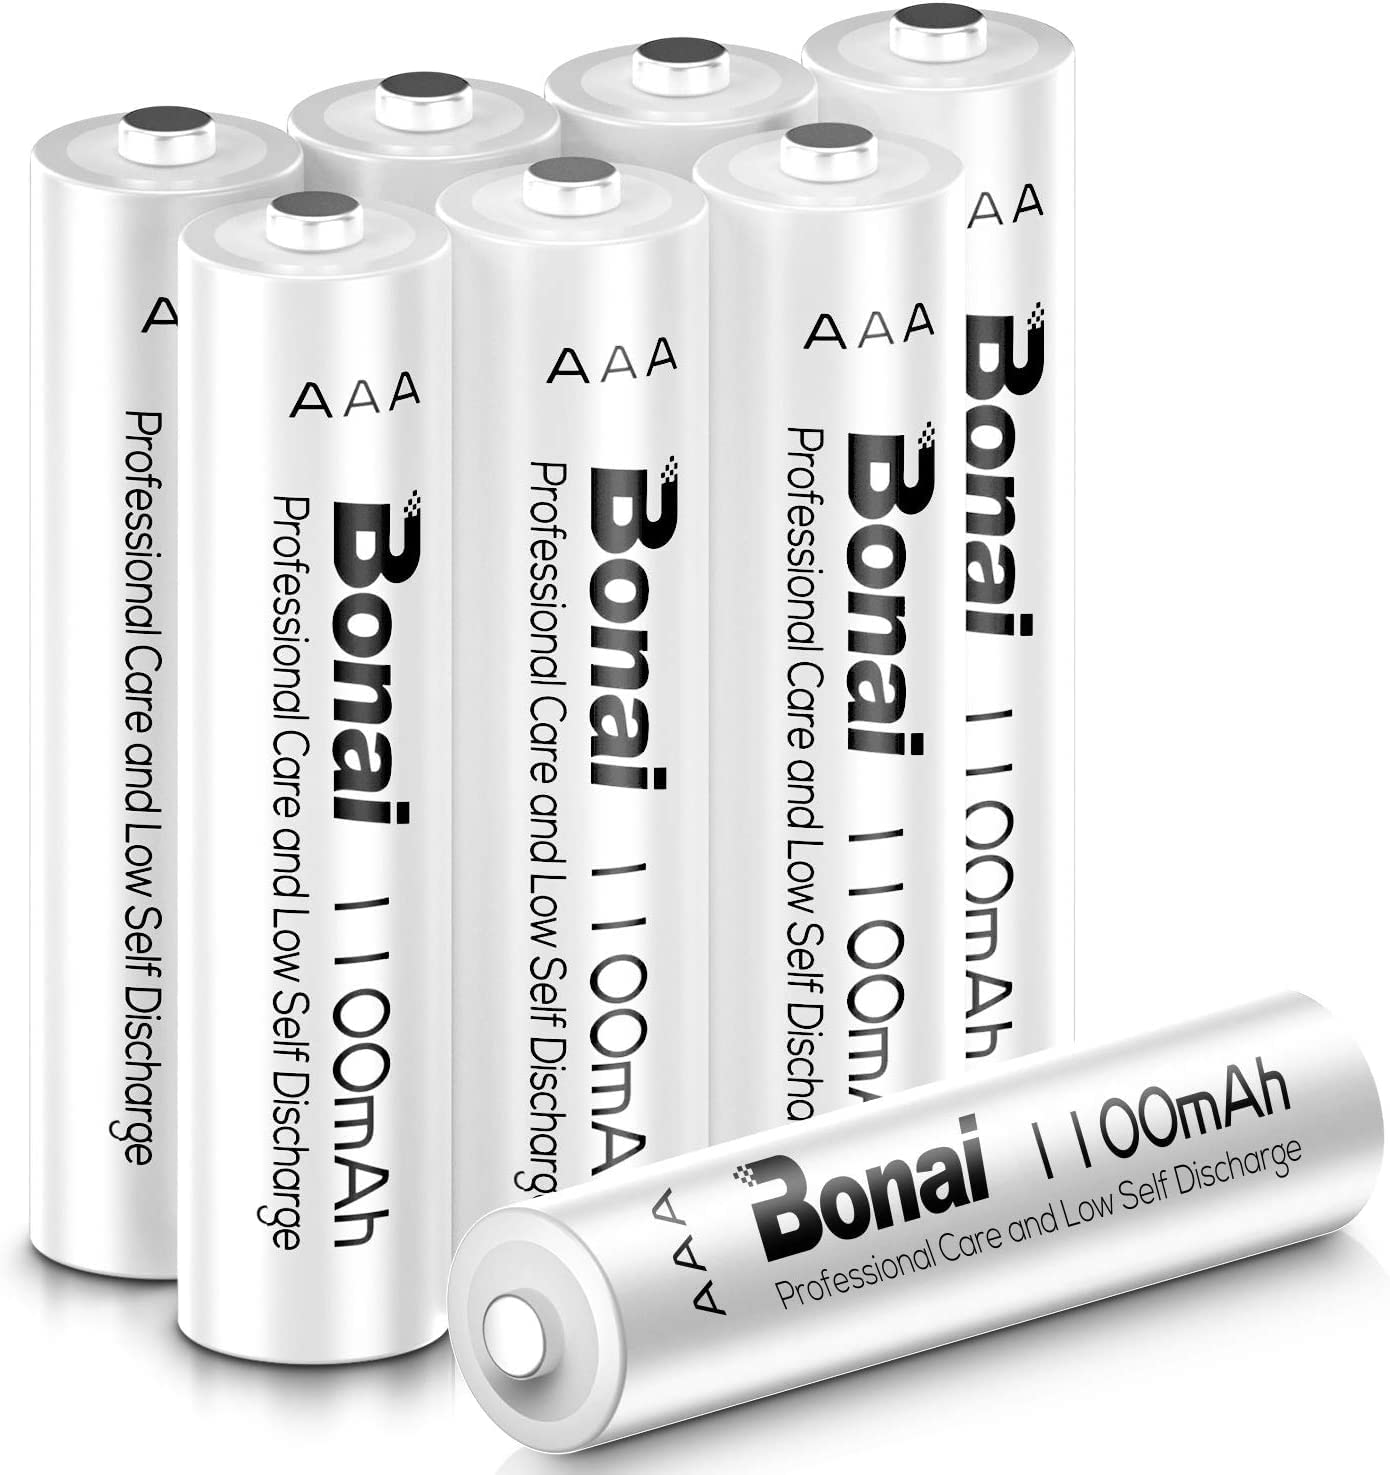 BONAI 単4形 充電式電池 ニッケル水素電池 8個パックCEマーキング取得 UL認証済み 自然放電抑制 液漏れ防止設計 環境友好タイプ（高容量1